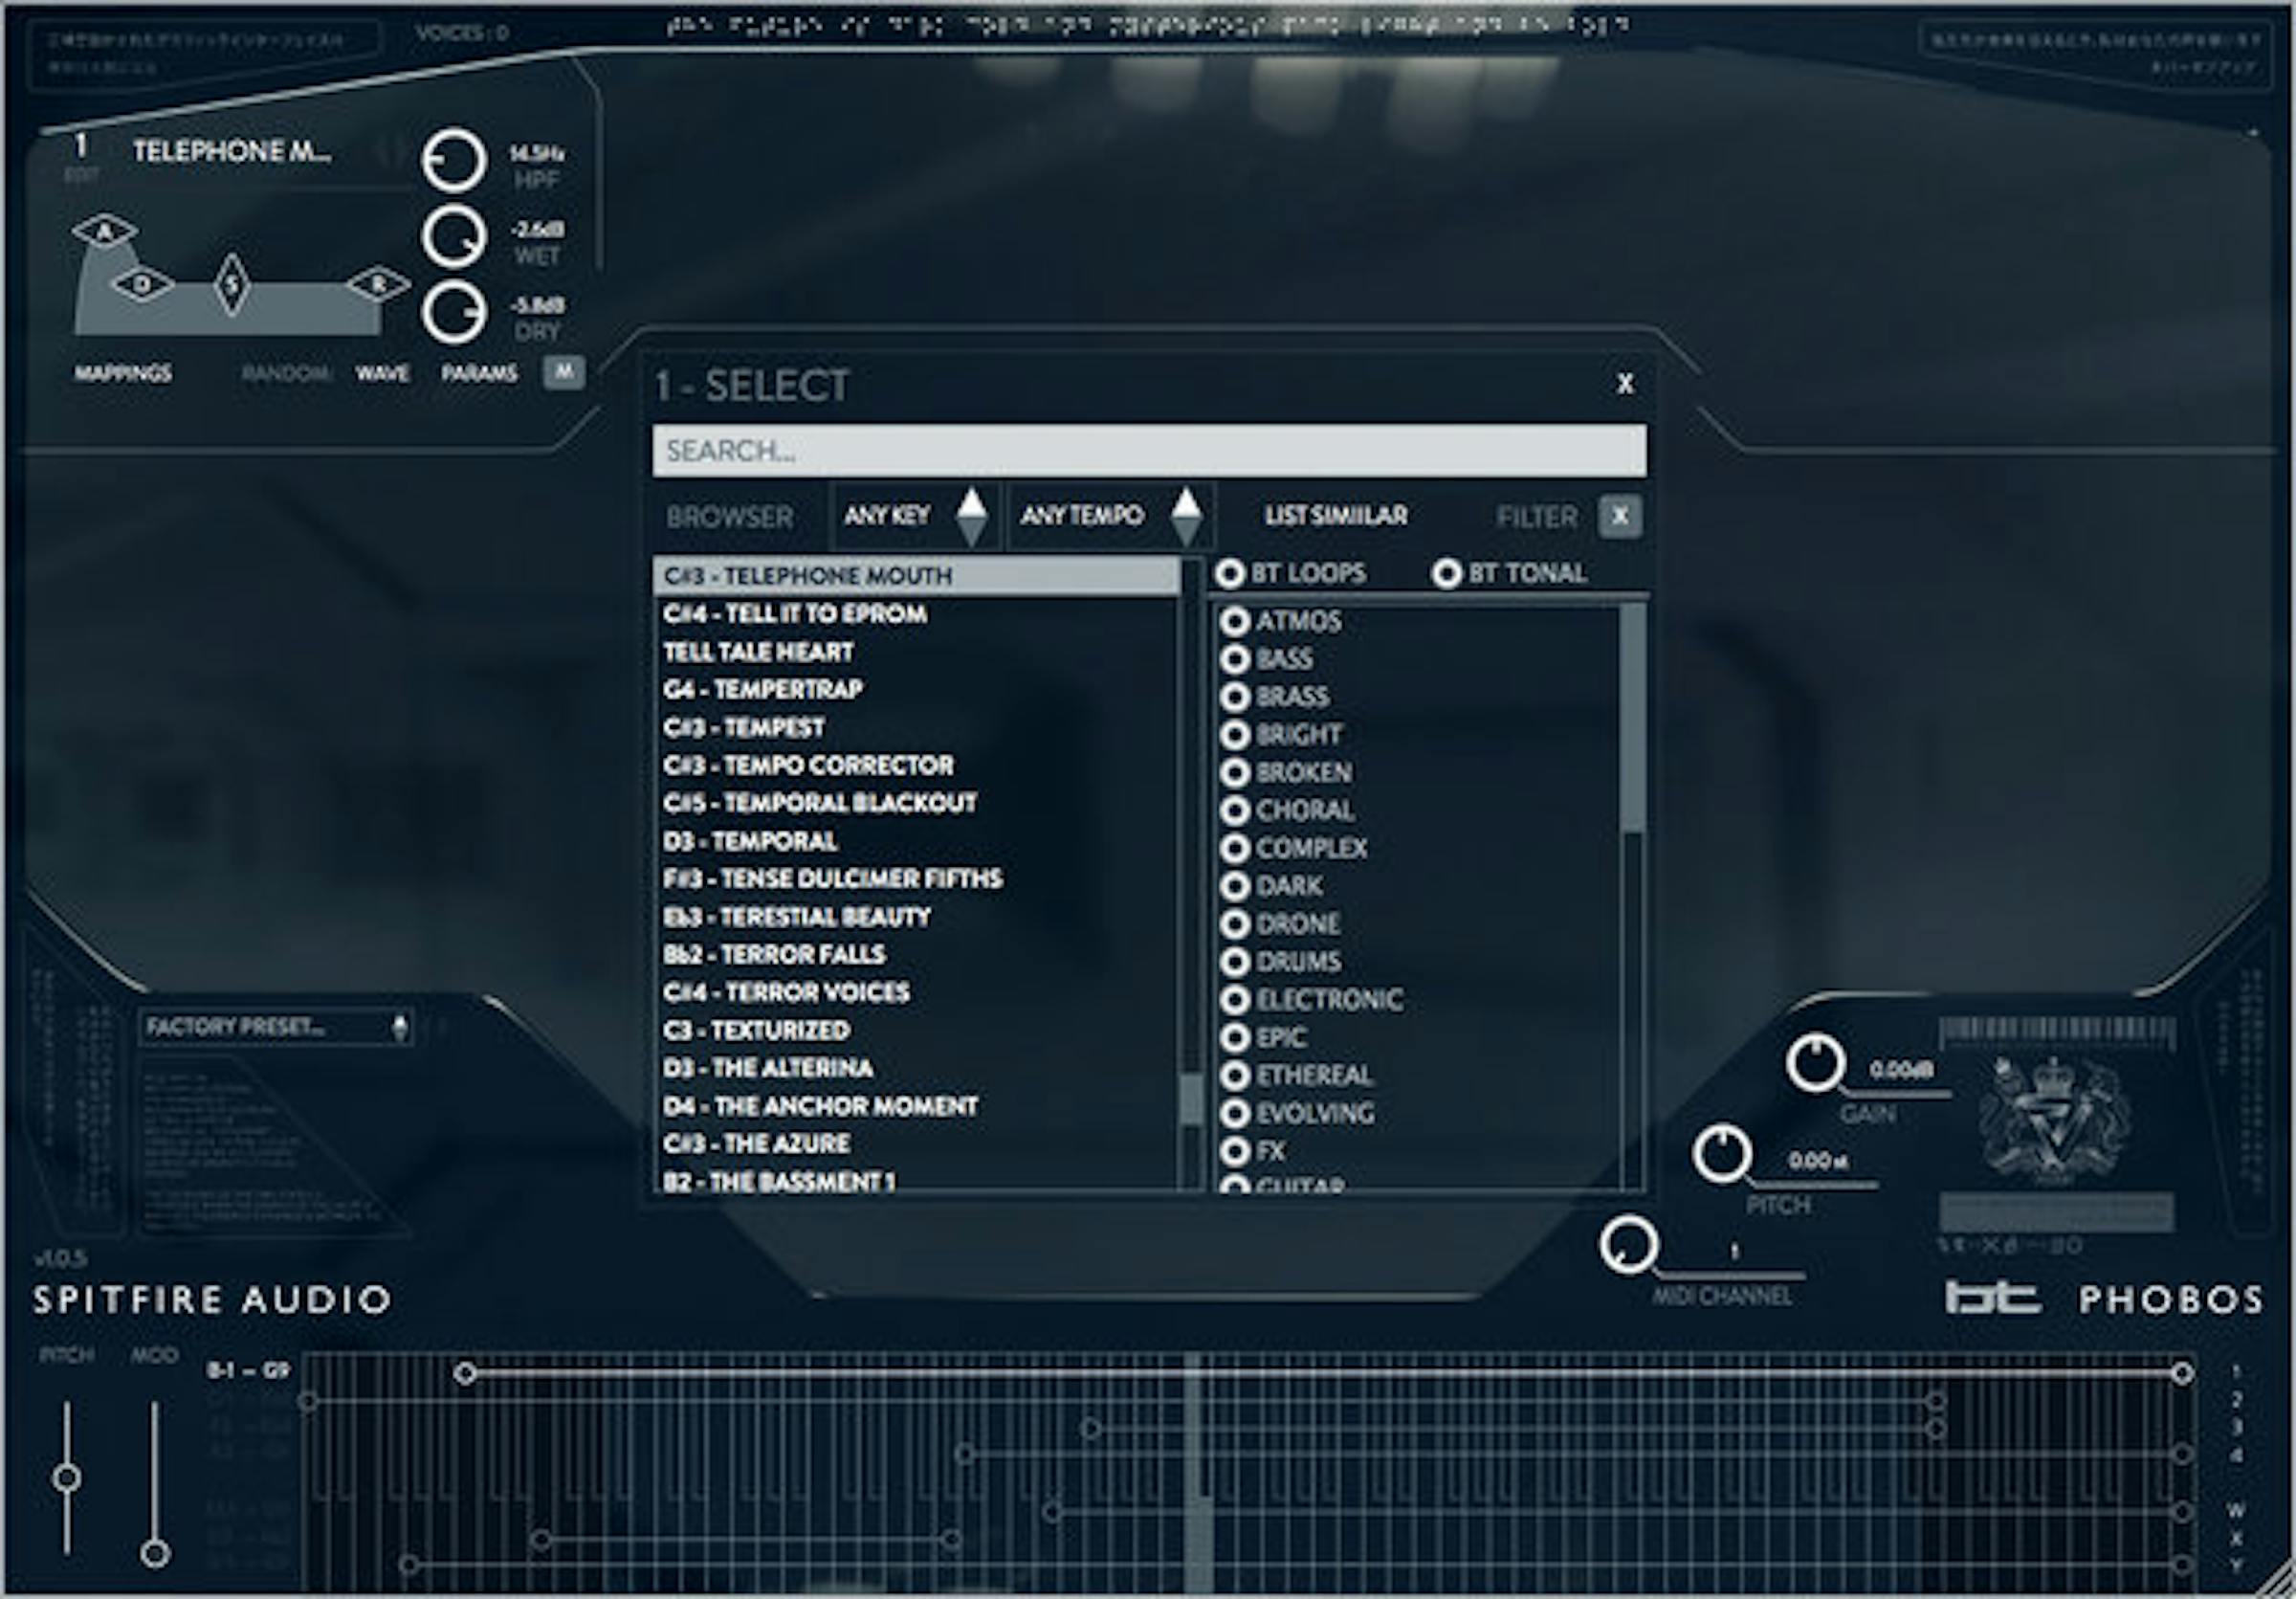 GUI screenshot of browser panels